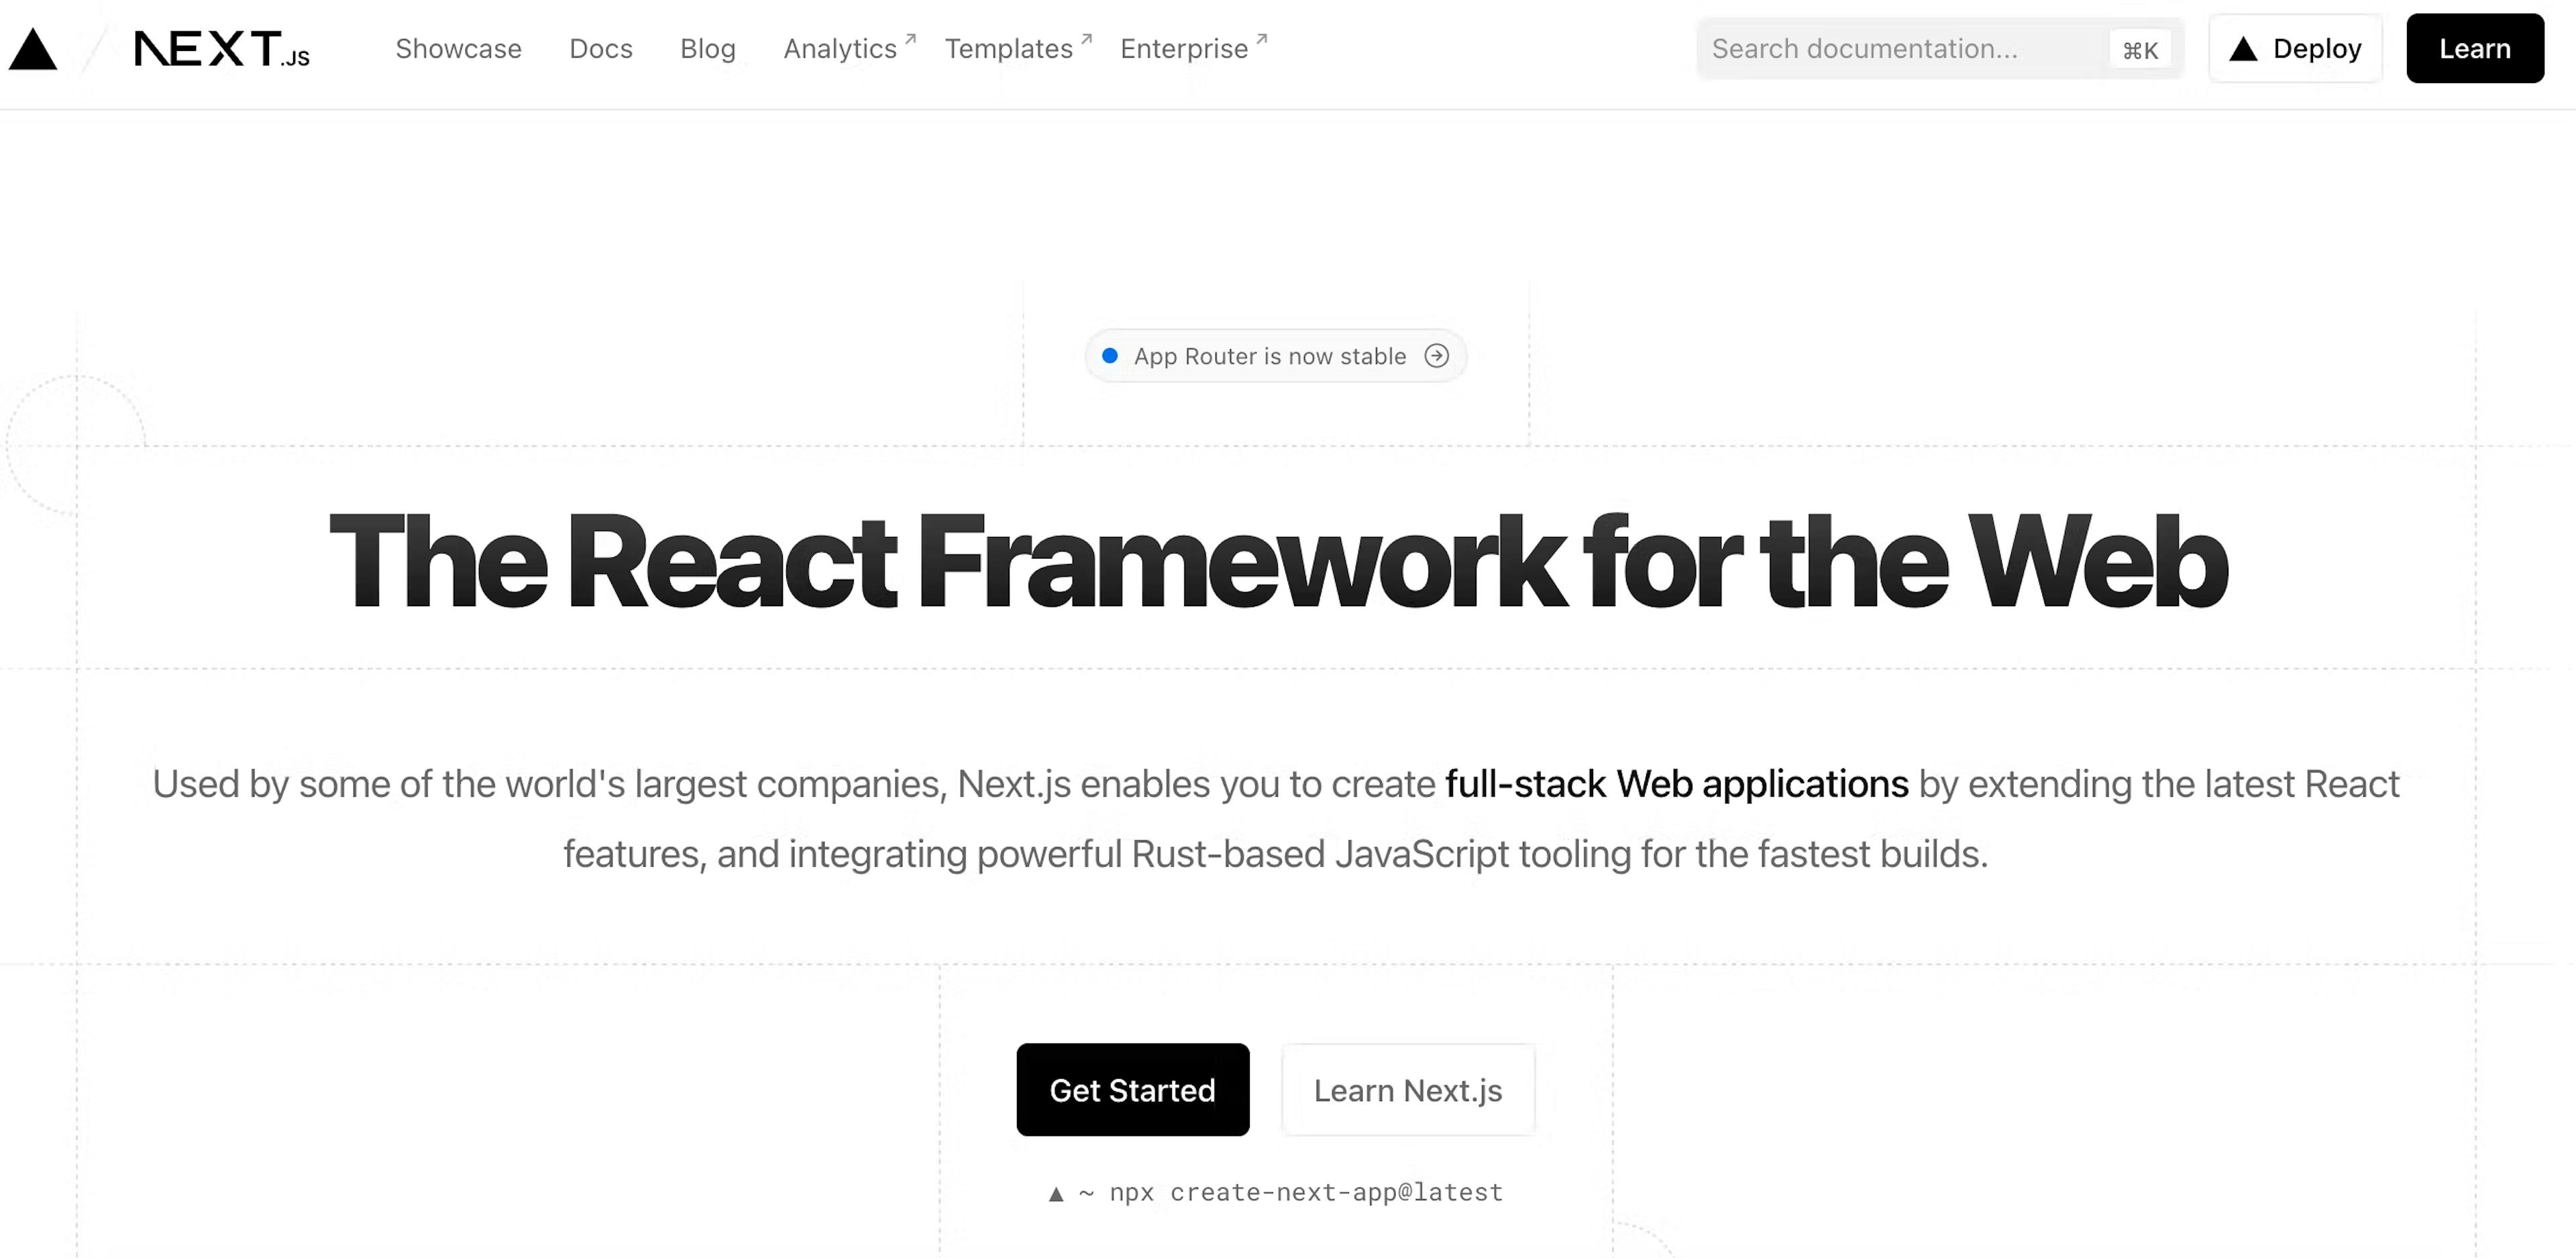 Next.js - React Framework